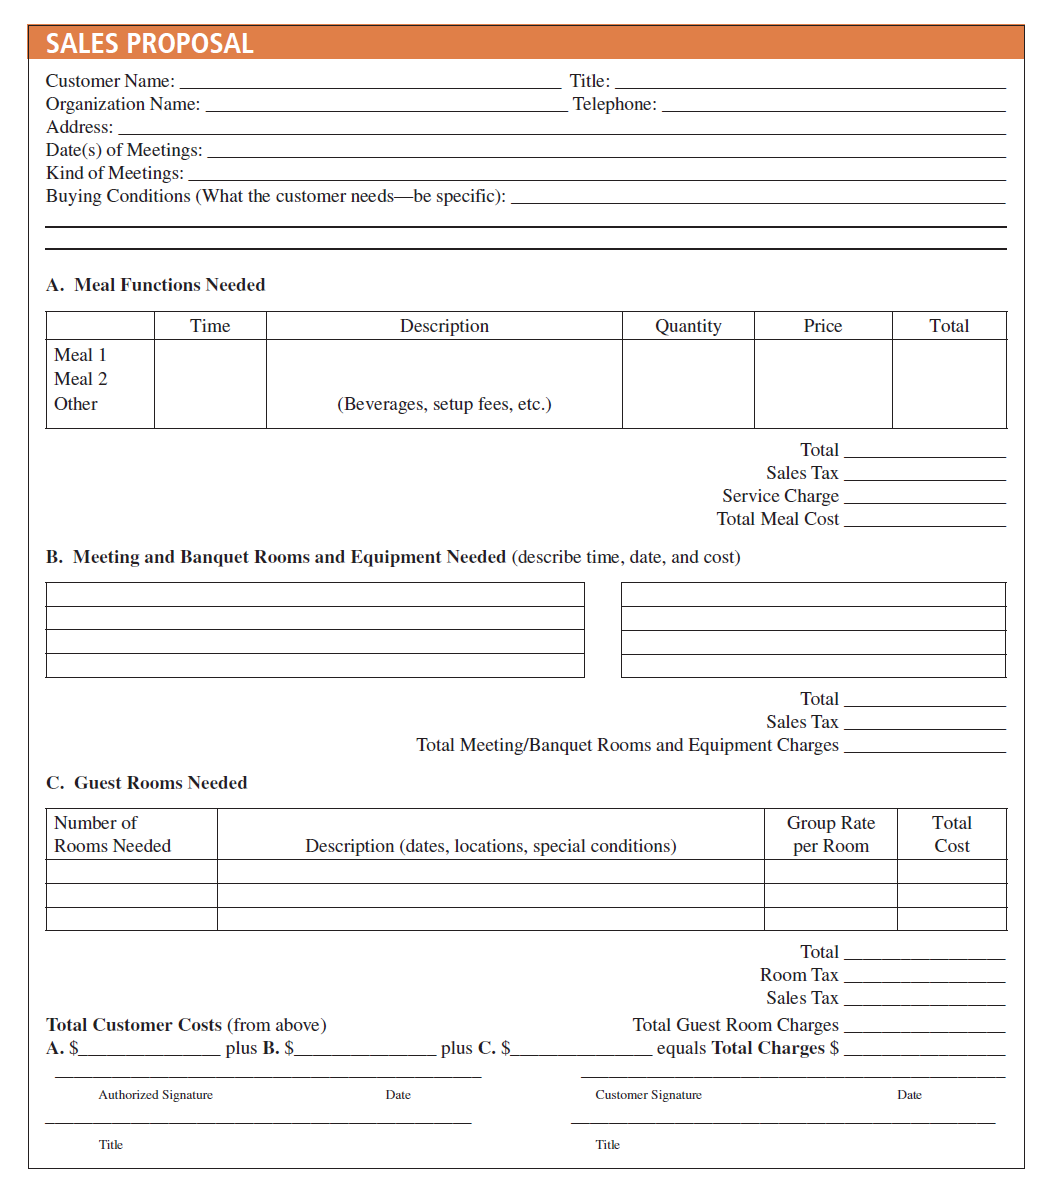 A ‘Sales Proposal’ form.